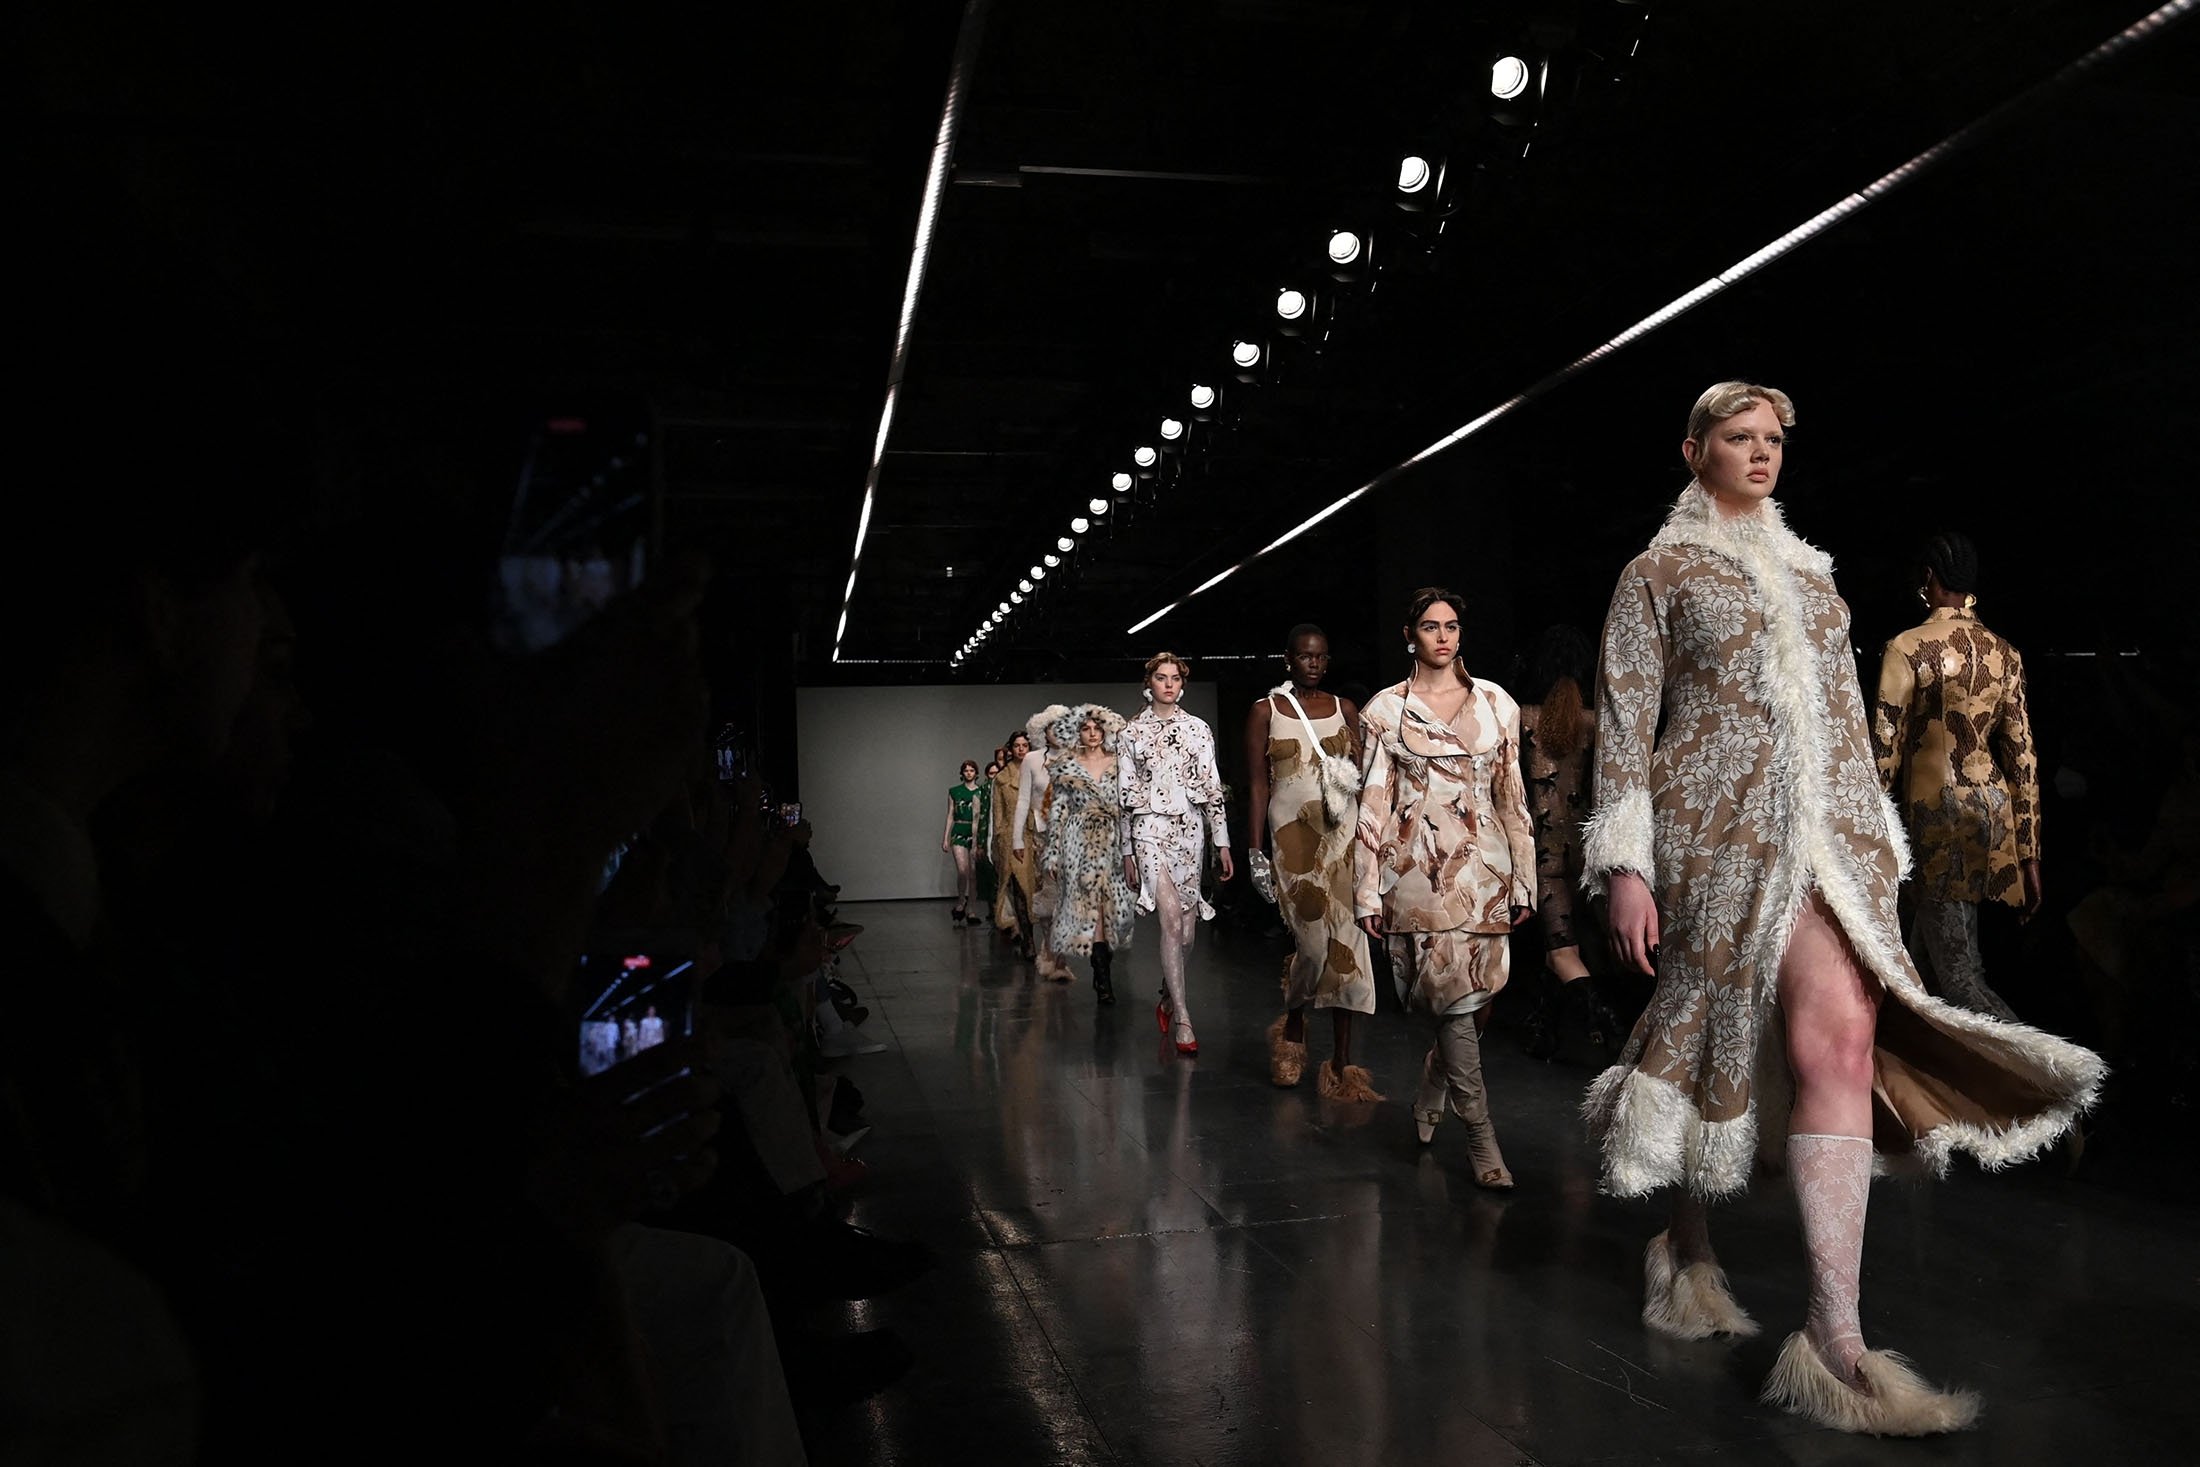 Turning heads at fabulous London Fashion Week | Daily Sabah